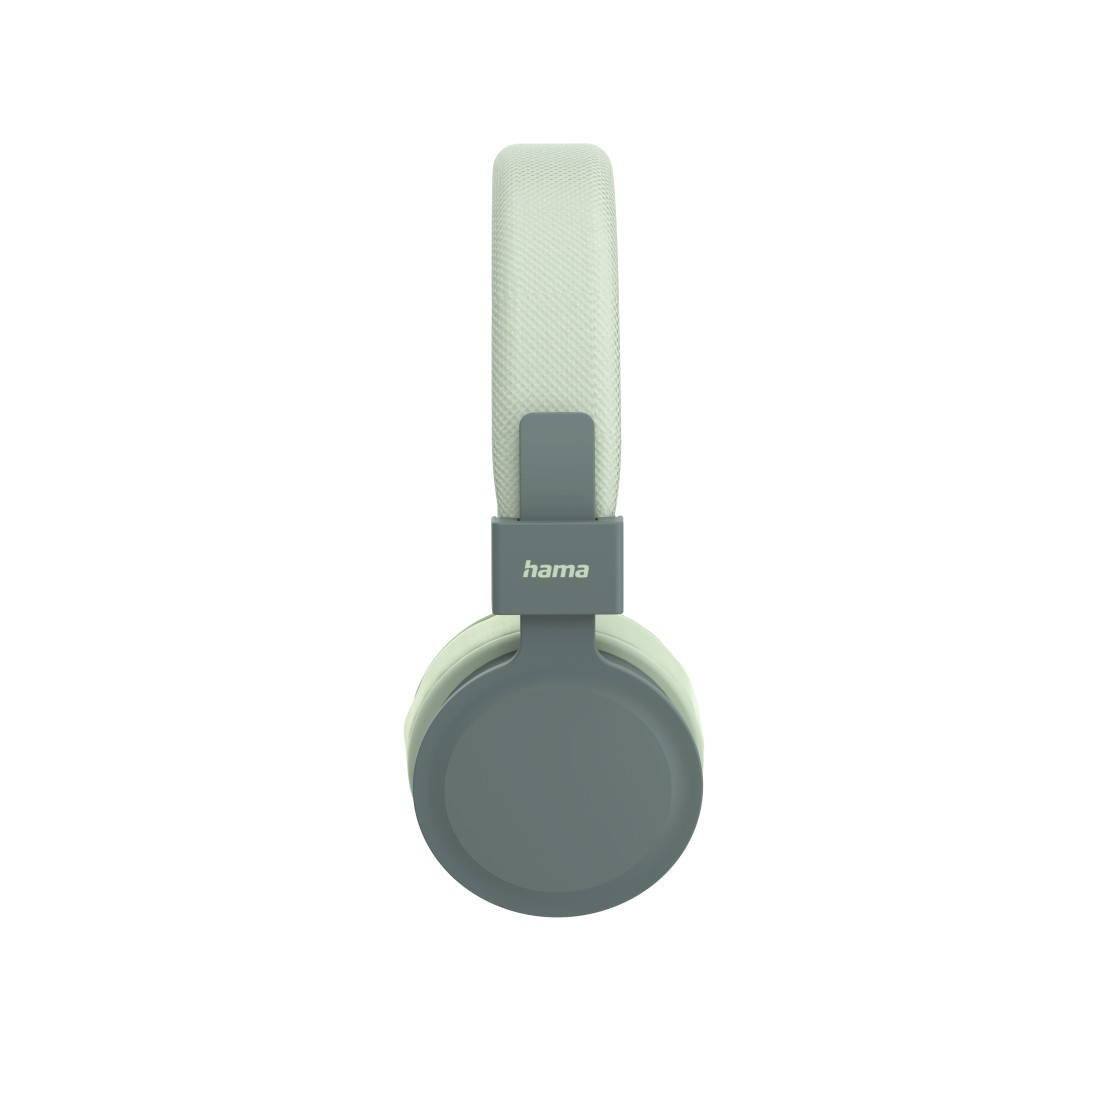 HAMA Freedom Lit, On-ear Stereo Grün Bluetooth